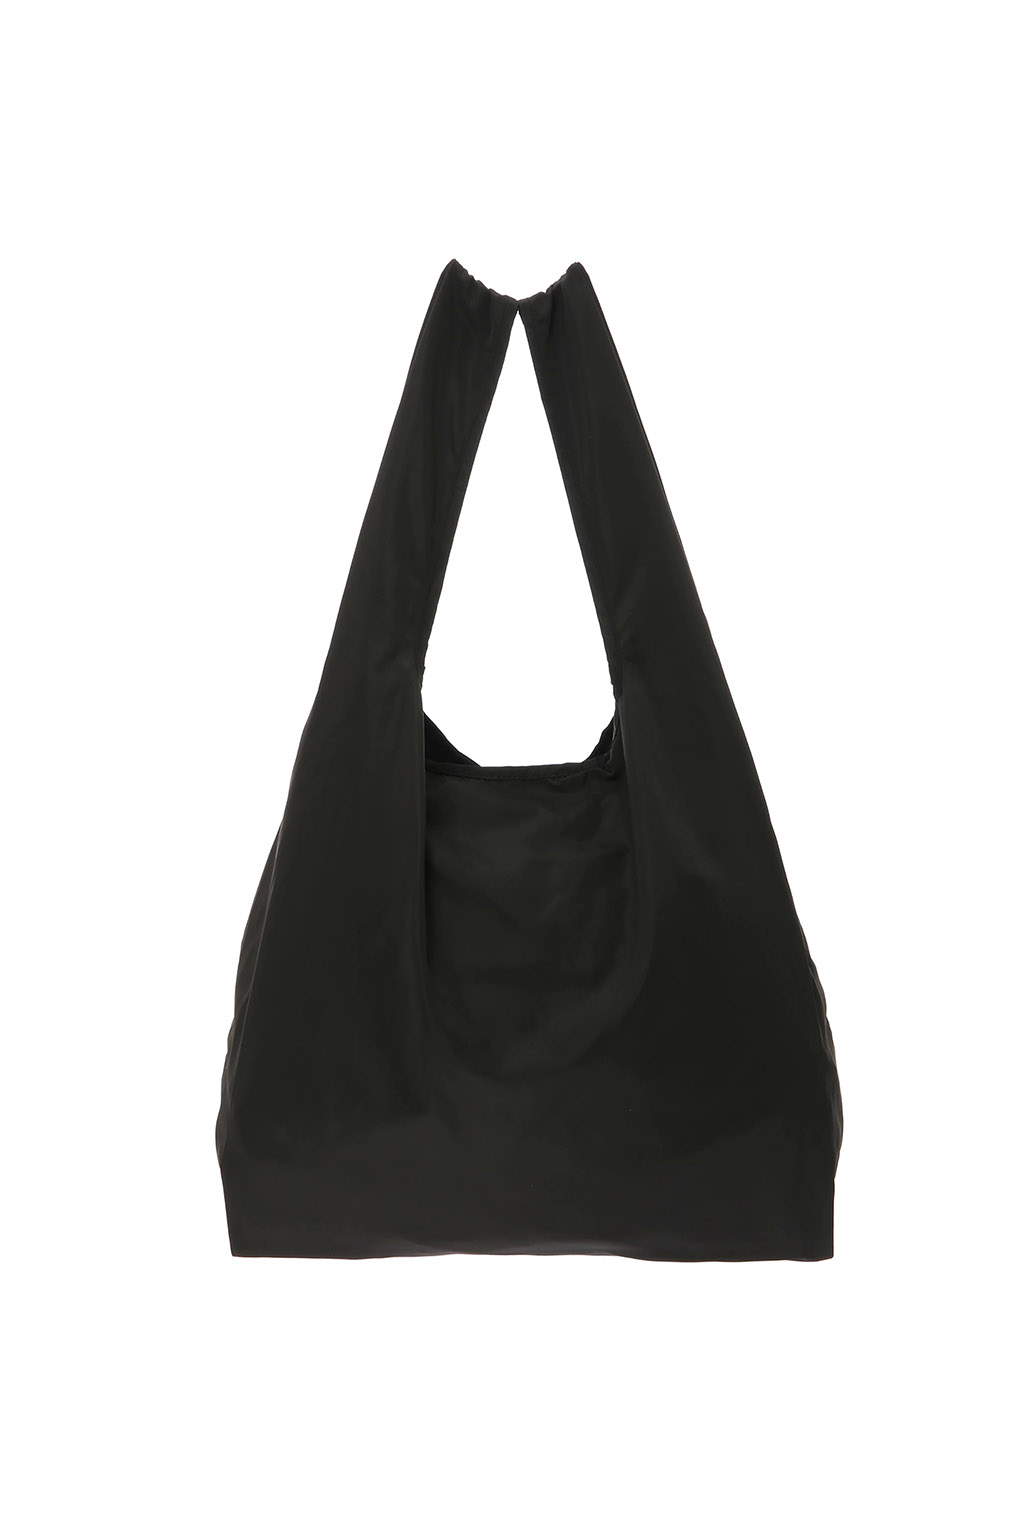 eco-friendly-bag-black04